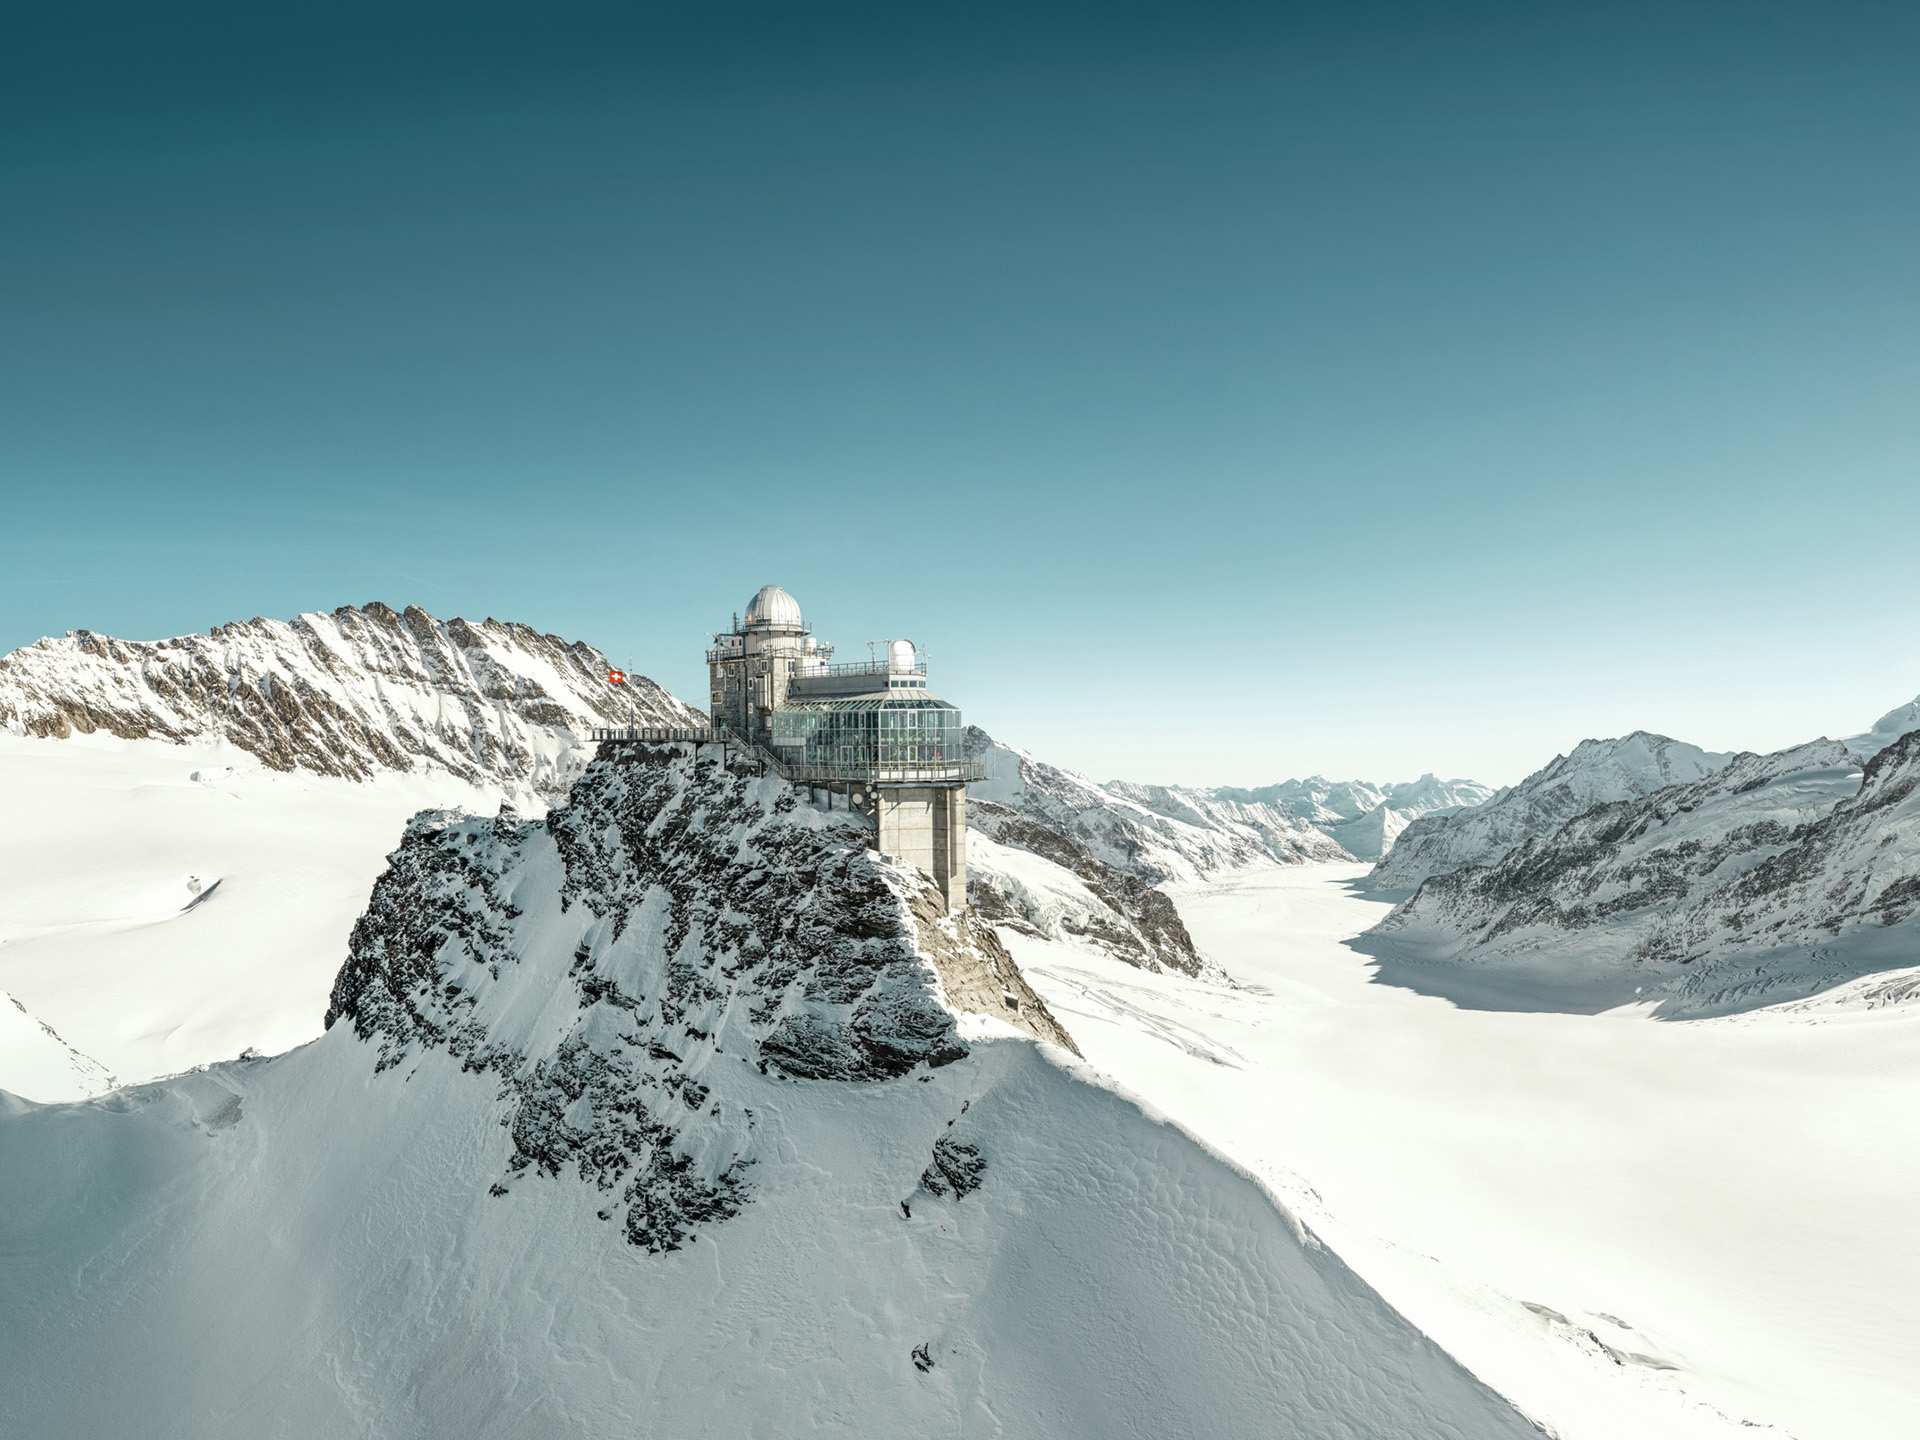 Switzerland Swiss Travel Pass | Jungfraujoch "Top of Europe" observatory